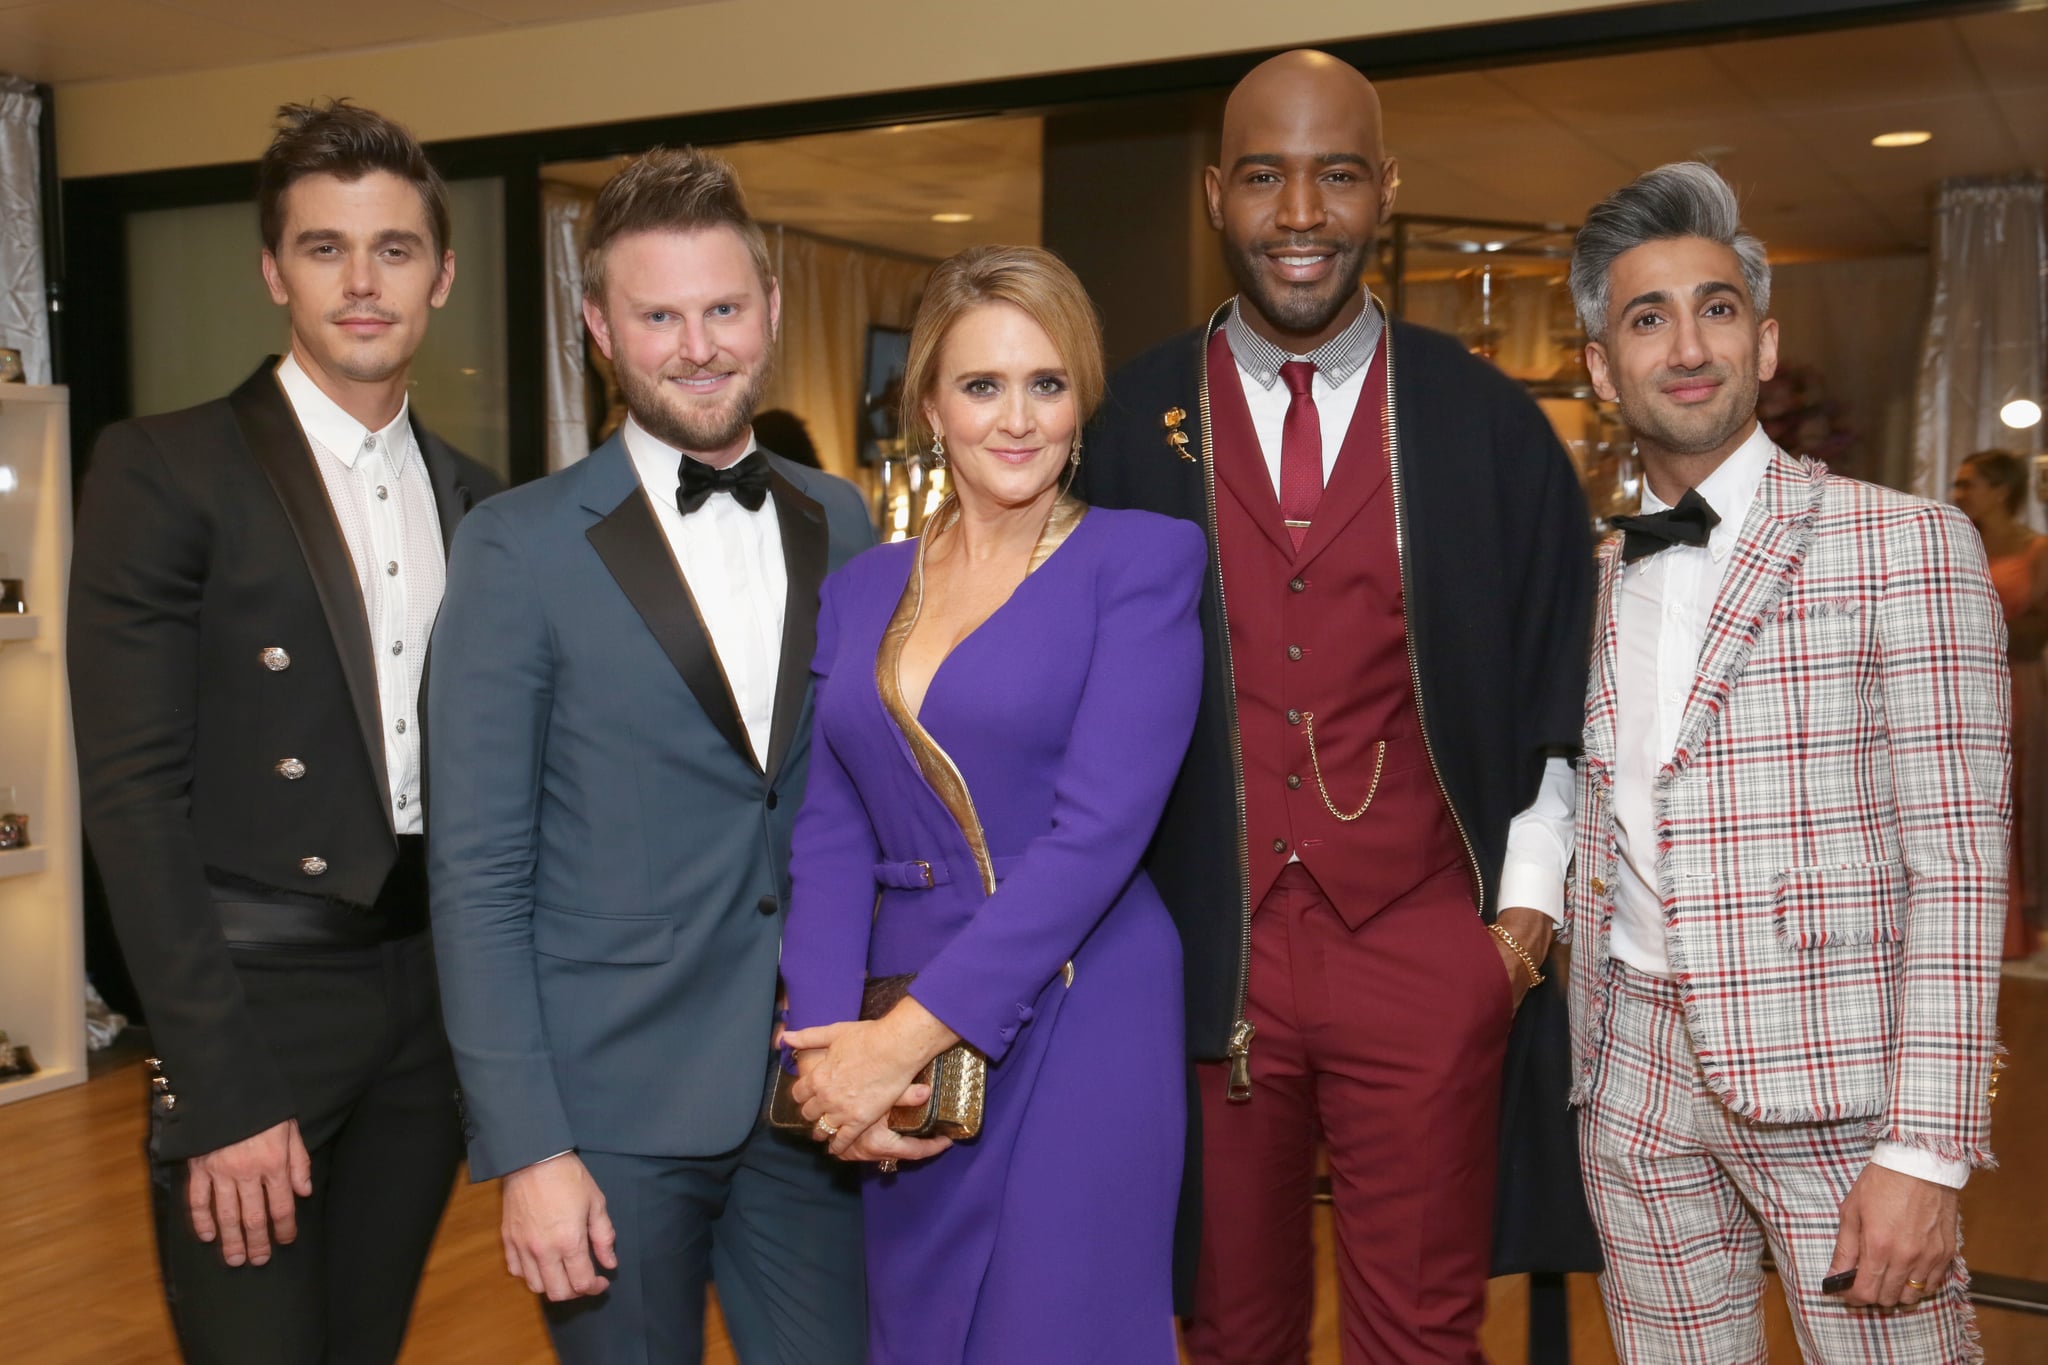 Antoni Porowski, Bobby Berk, Samantha Bee, Karamo Brown, and Tan France at the 2018 Emmy Awards